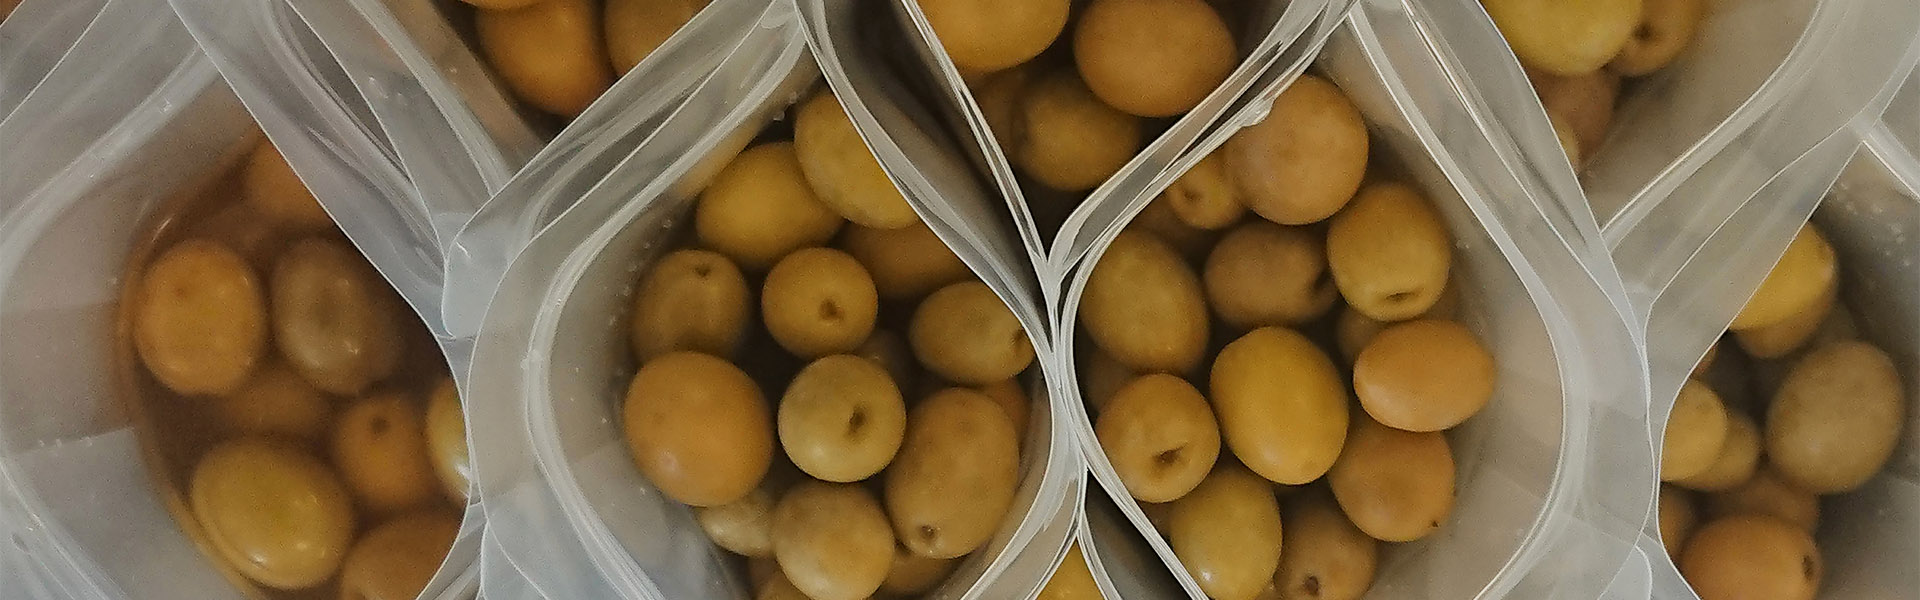 Australian wild fermented olives in bags, credit Gamila MacRury